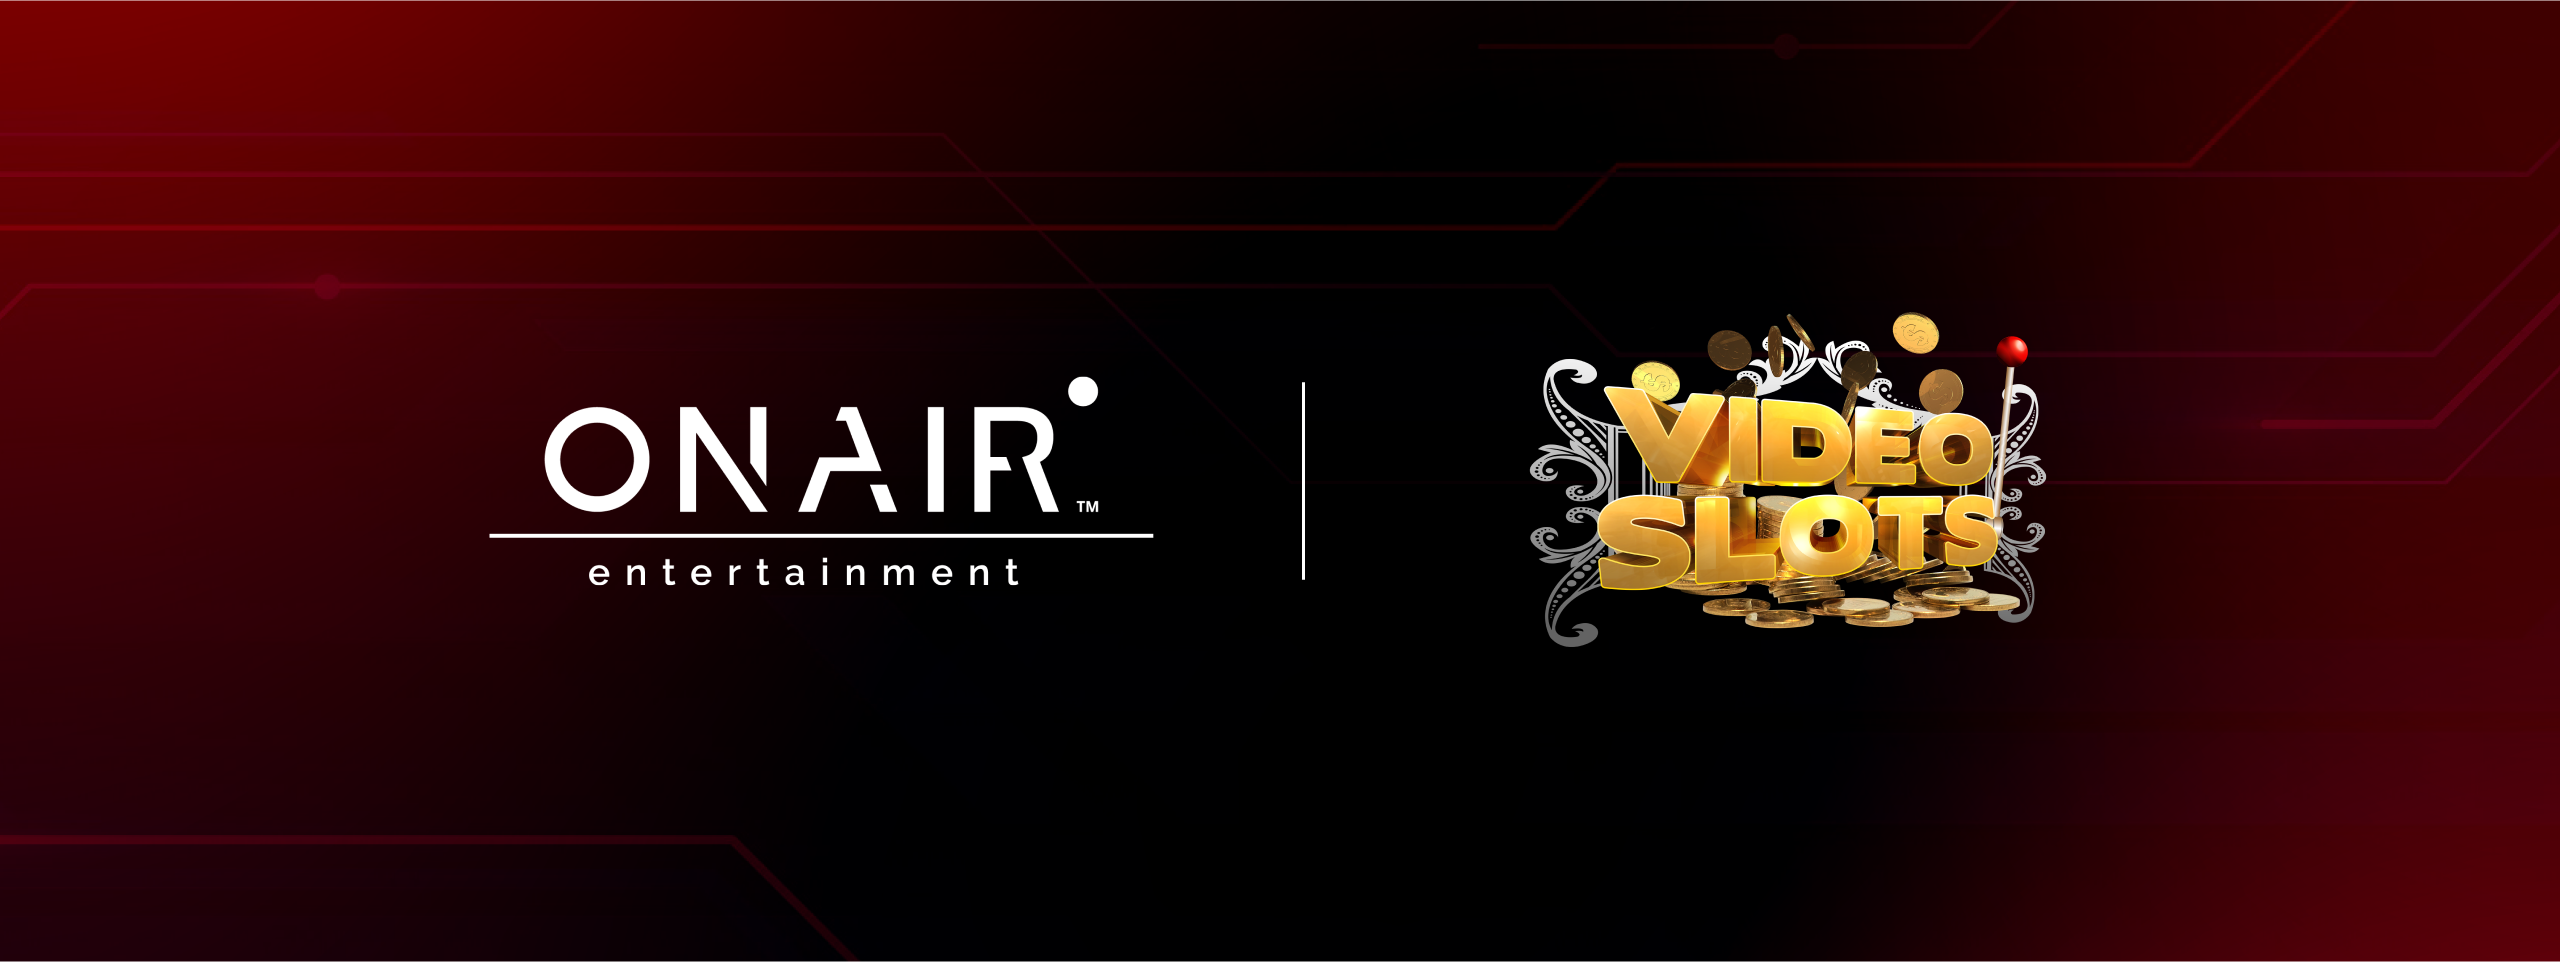 Videoslots and OnAir Entertainment logos to represent their partnership.